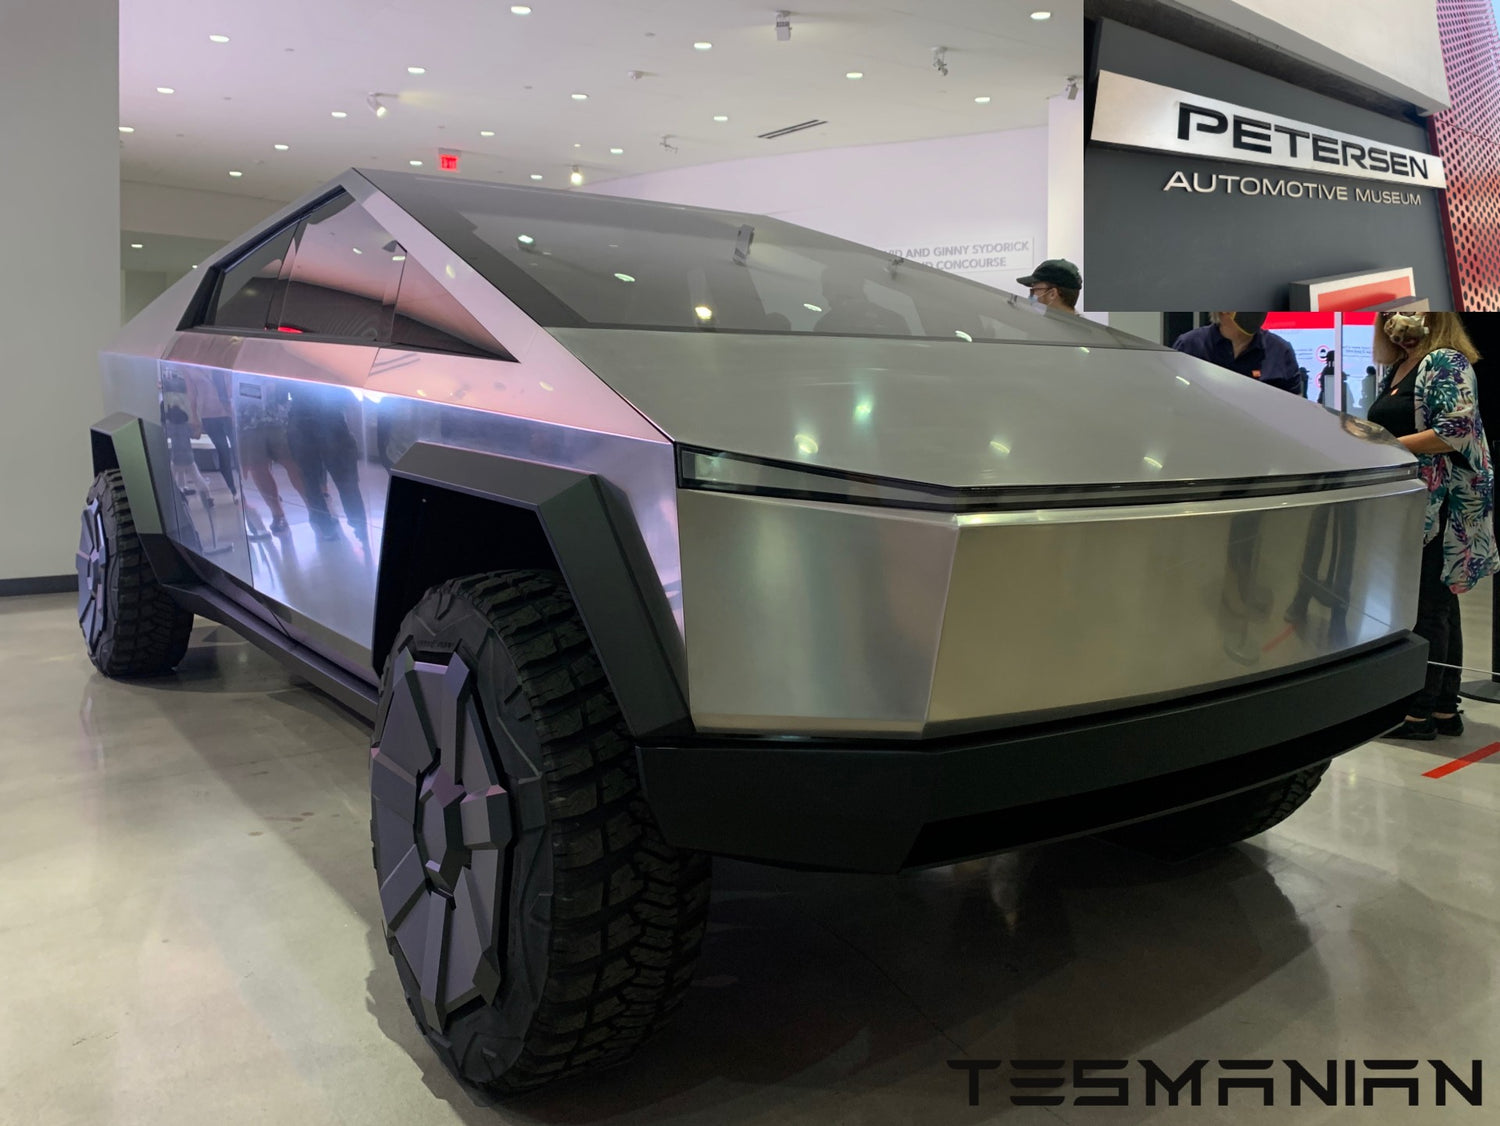 Tesla Cybertruck In Petersen Automotive Museum Hints At Mysterious New